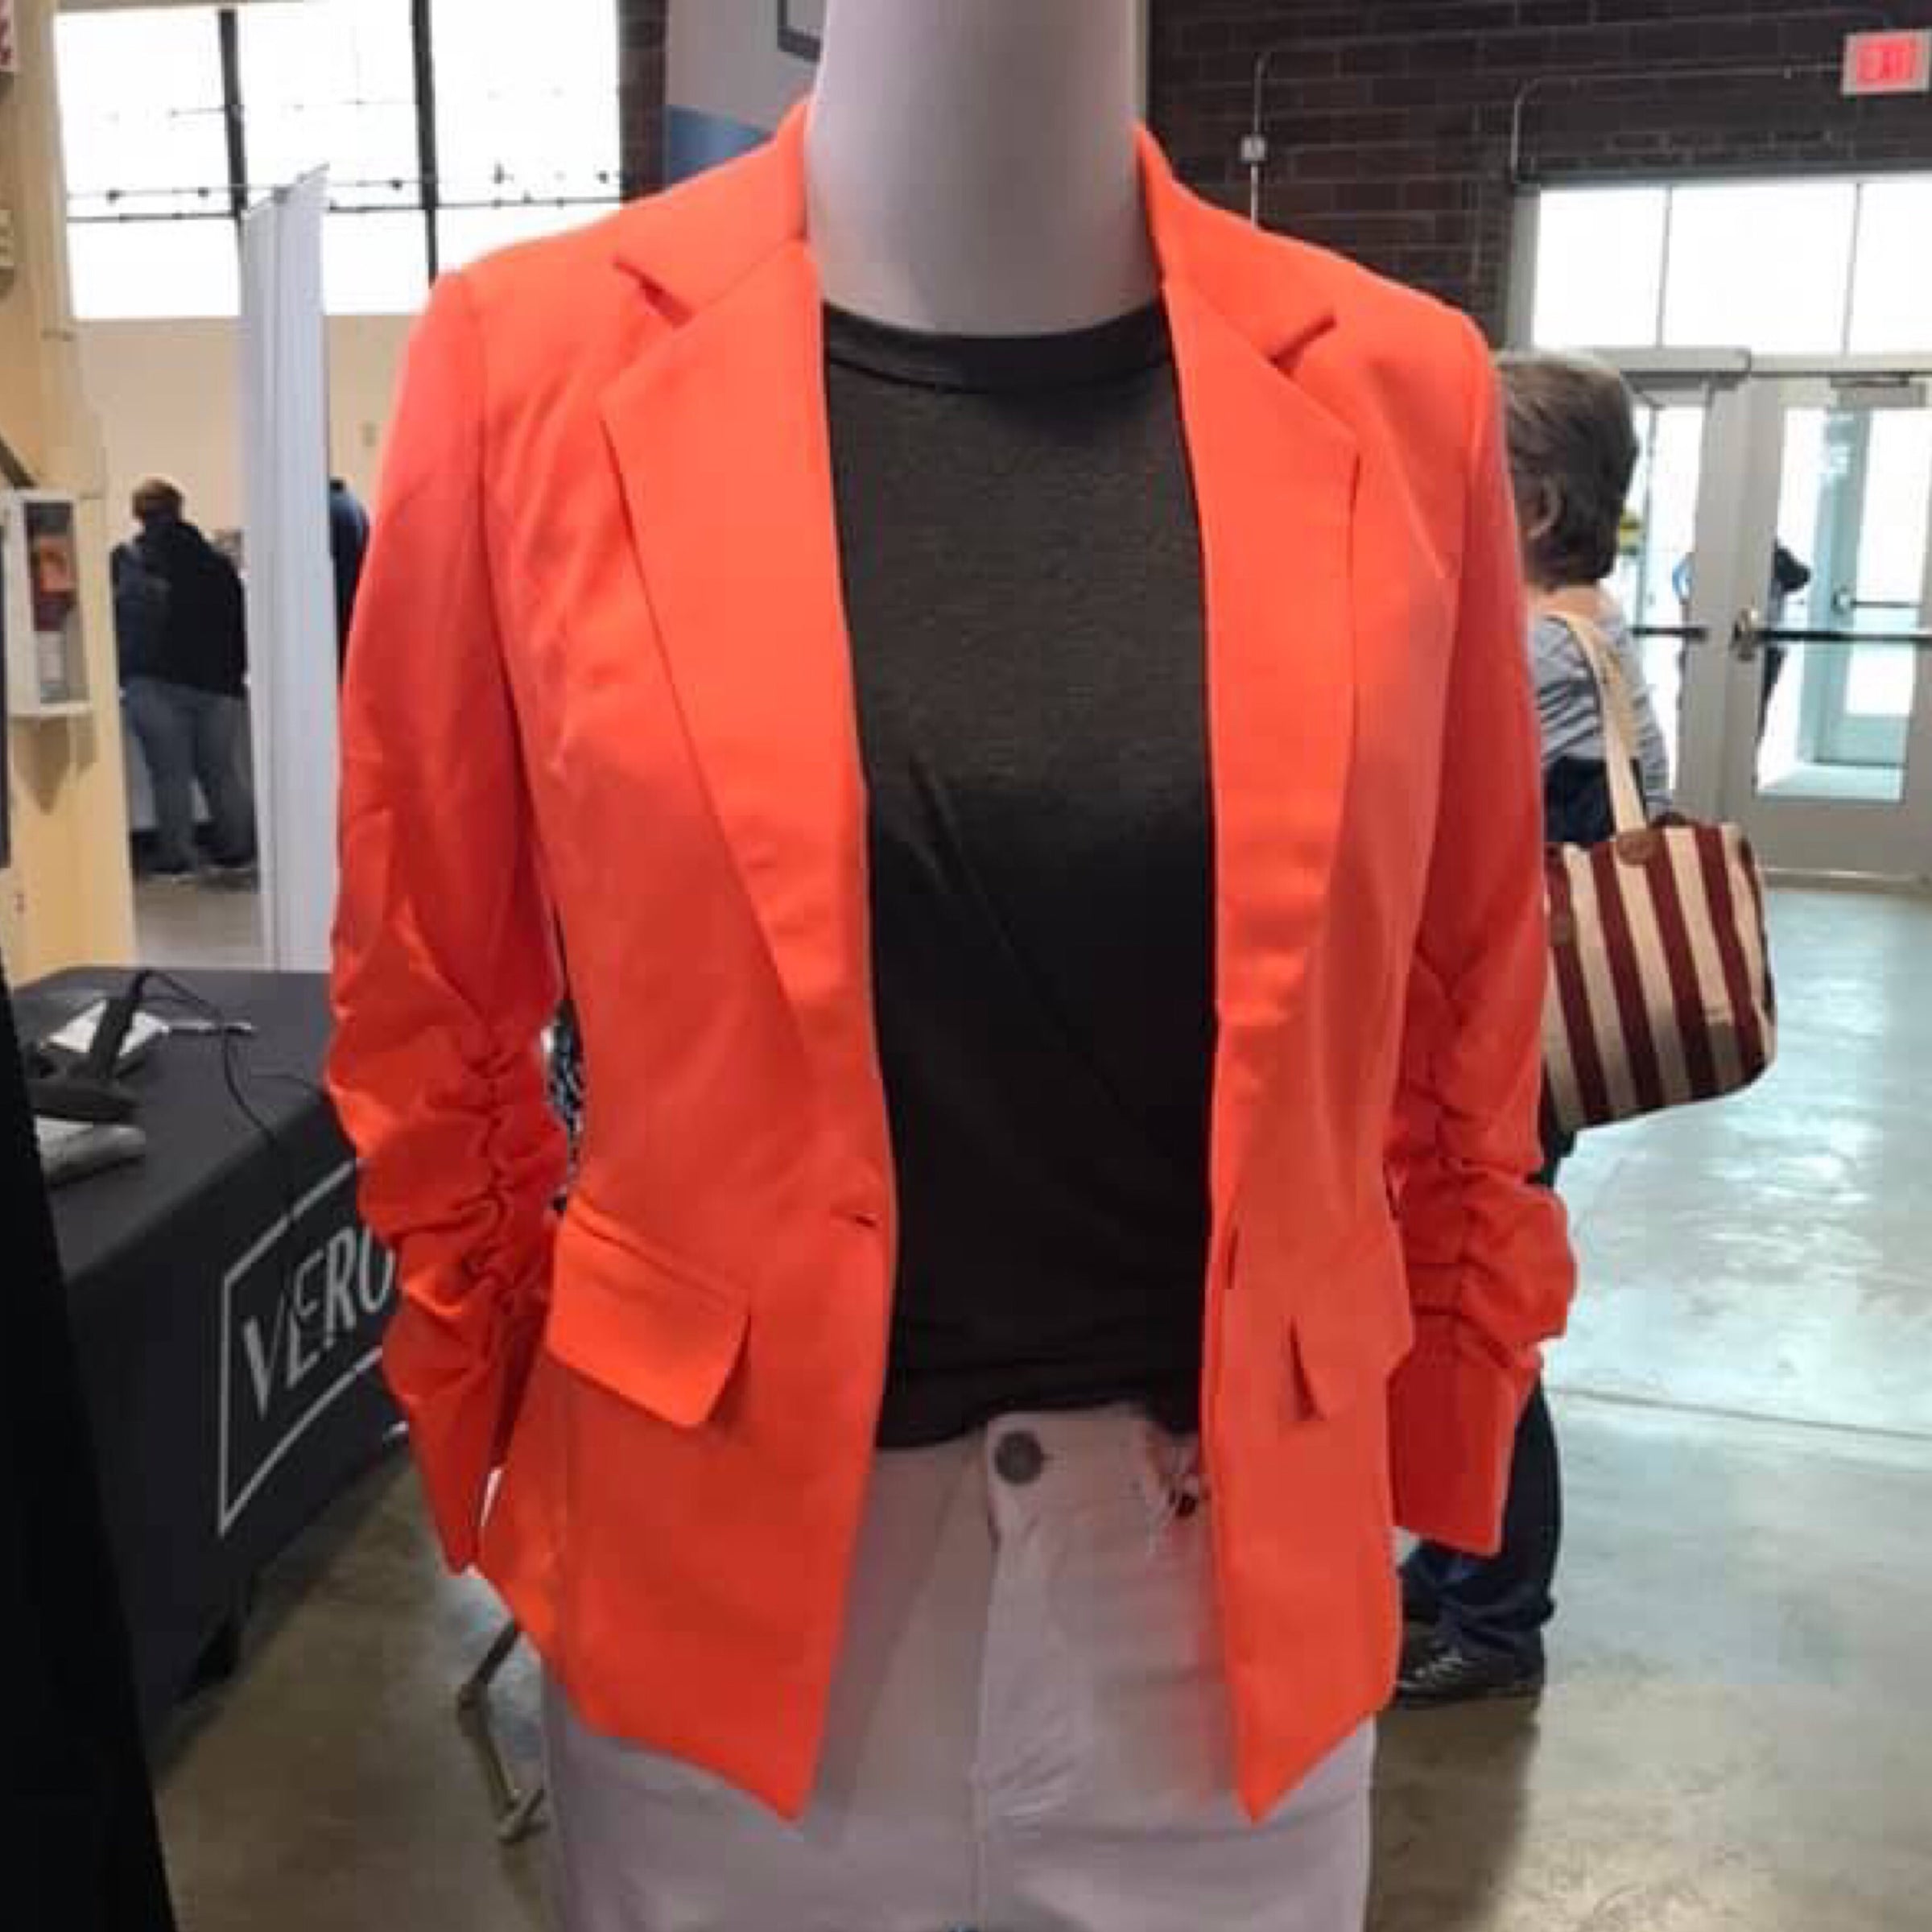 Neon Orange Give Me Ruched Short Blazer - TheBrownEyedGirl Boutique